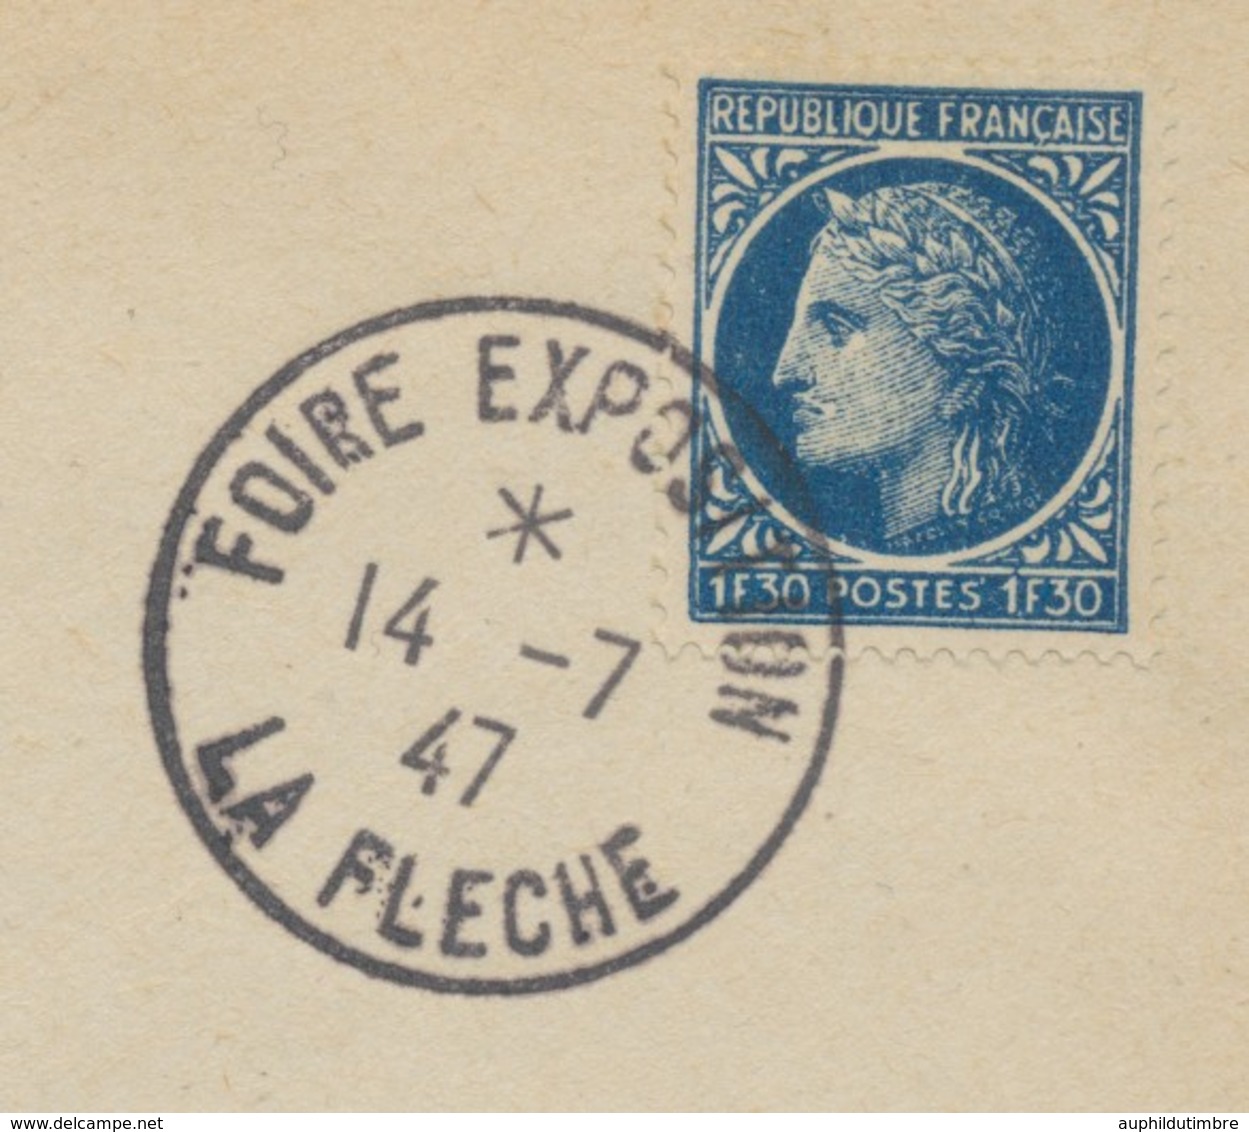 1947 Lettre Obl. FOIRE-EXPOSITION DE LA FLECHE EXTRA. C488 - Matasellos Conmemorativos